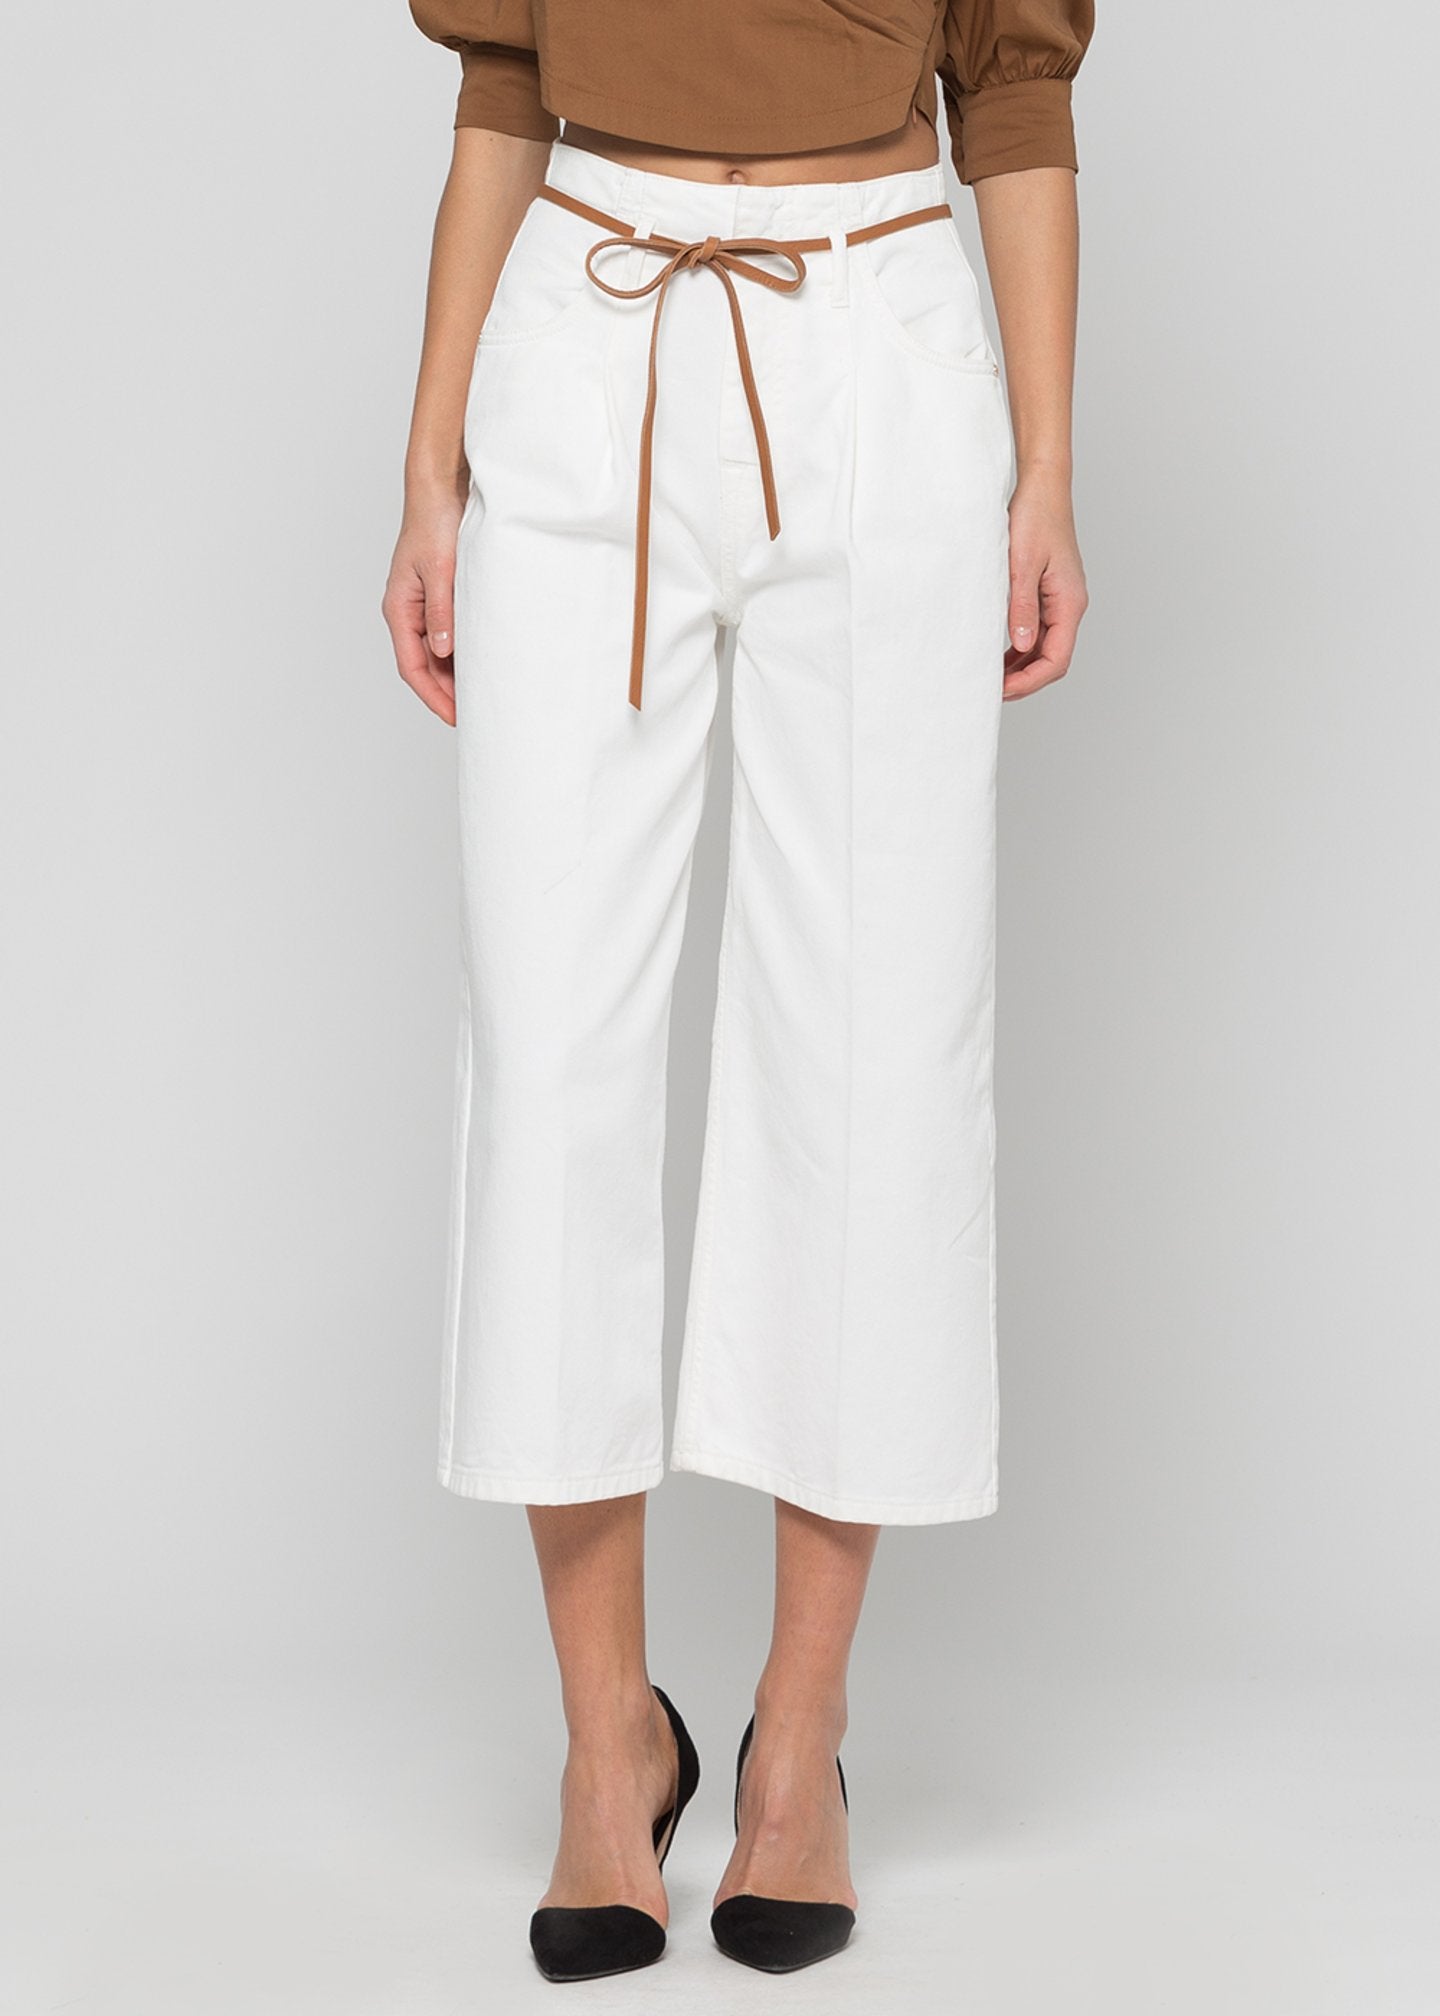 Pantalone Olu / Bianco - Ideal Moda